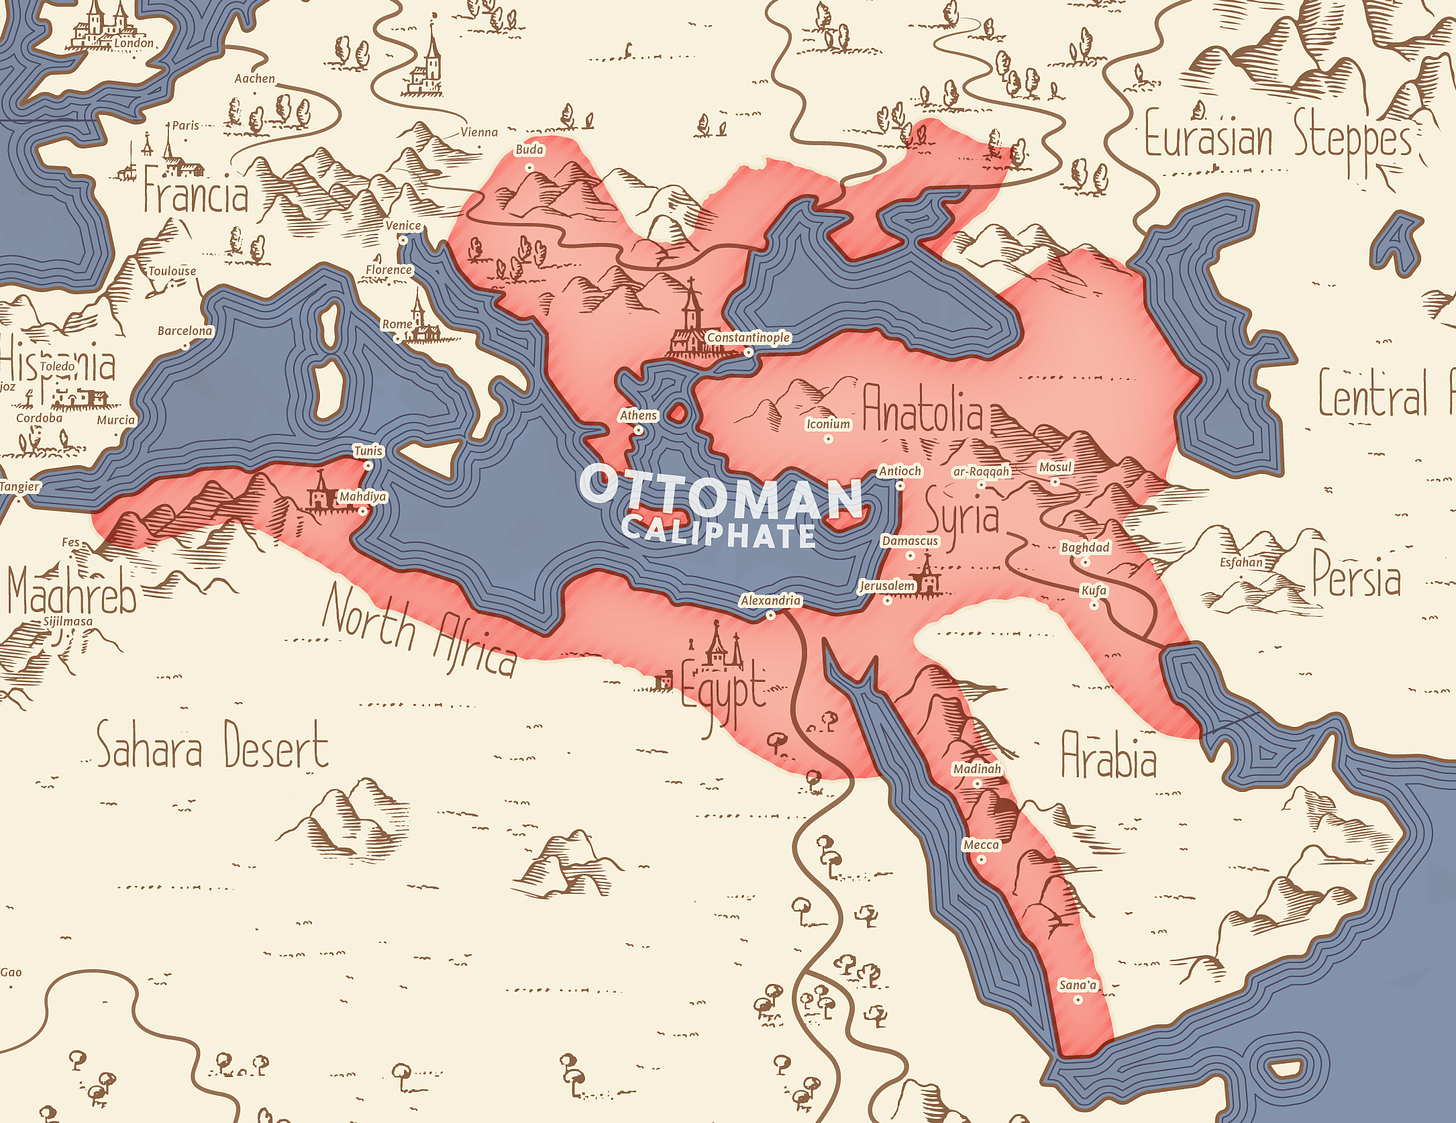 Ottoman Empire at its peak in 1683. : r/MapPorn